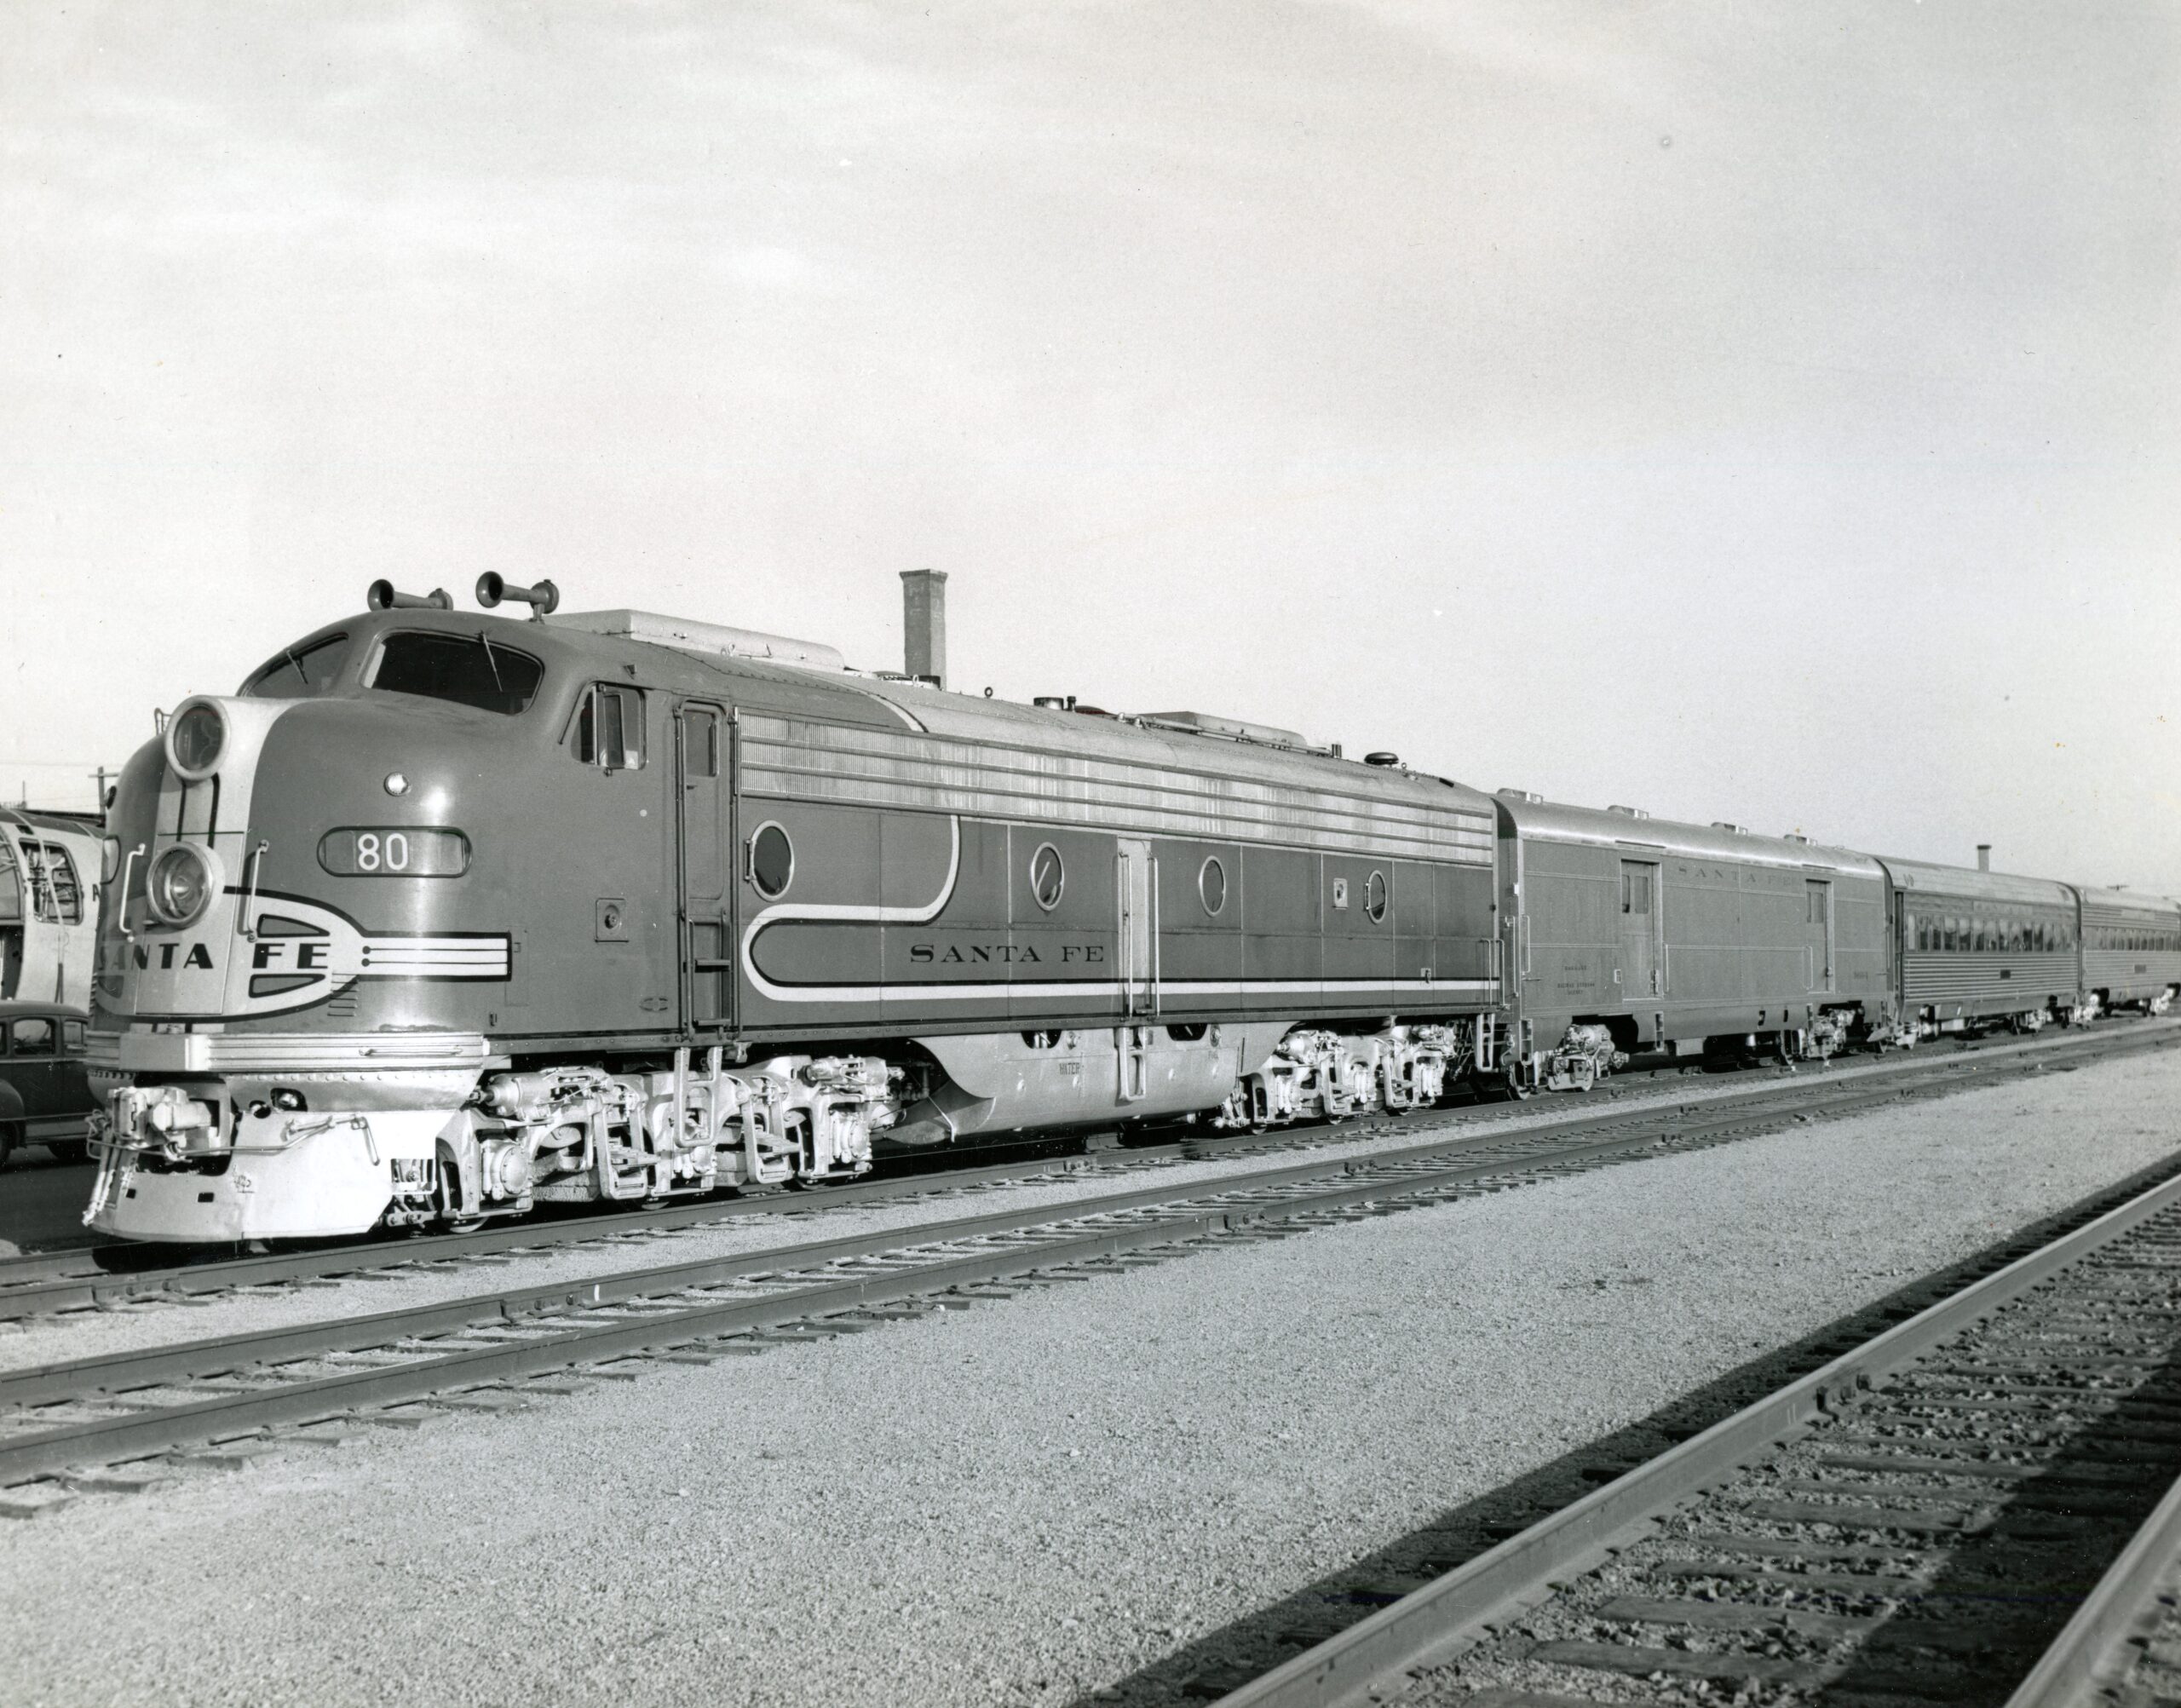 Atchison Topeka and Santa Fe Railway | Los Angeles, California | E8a #80 | Passenger Train | 1952